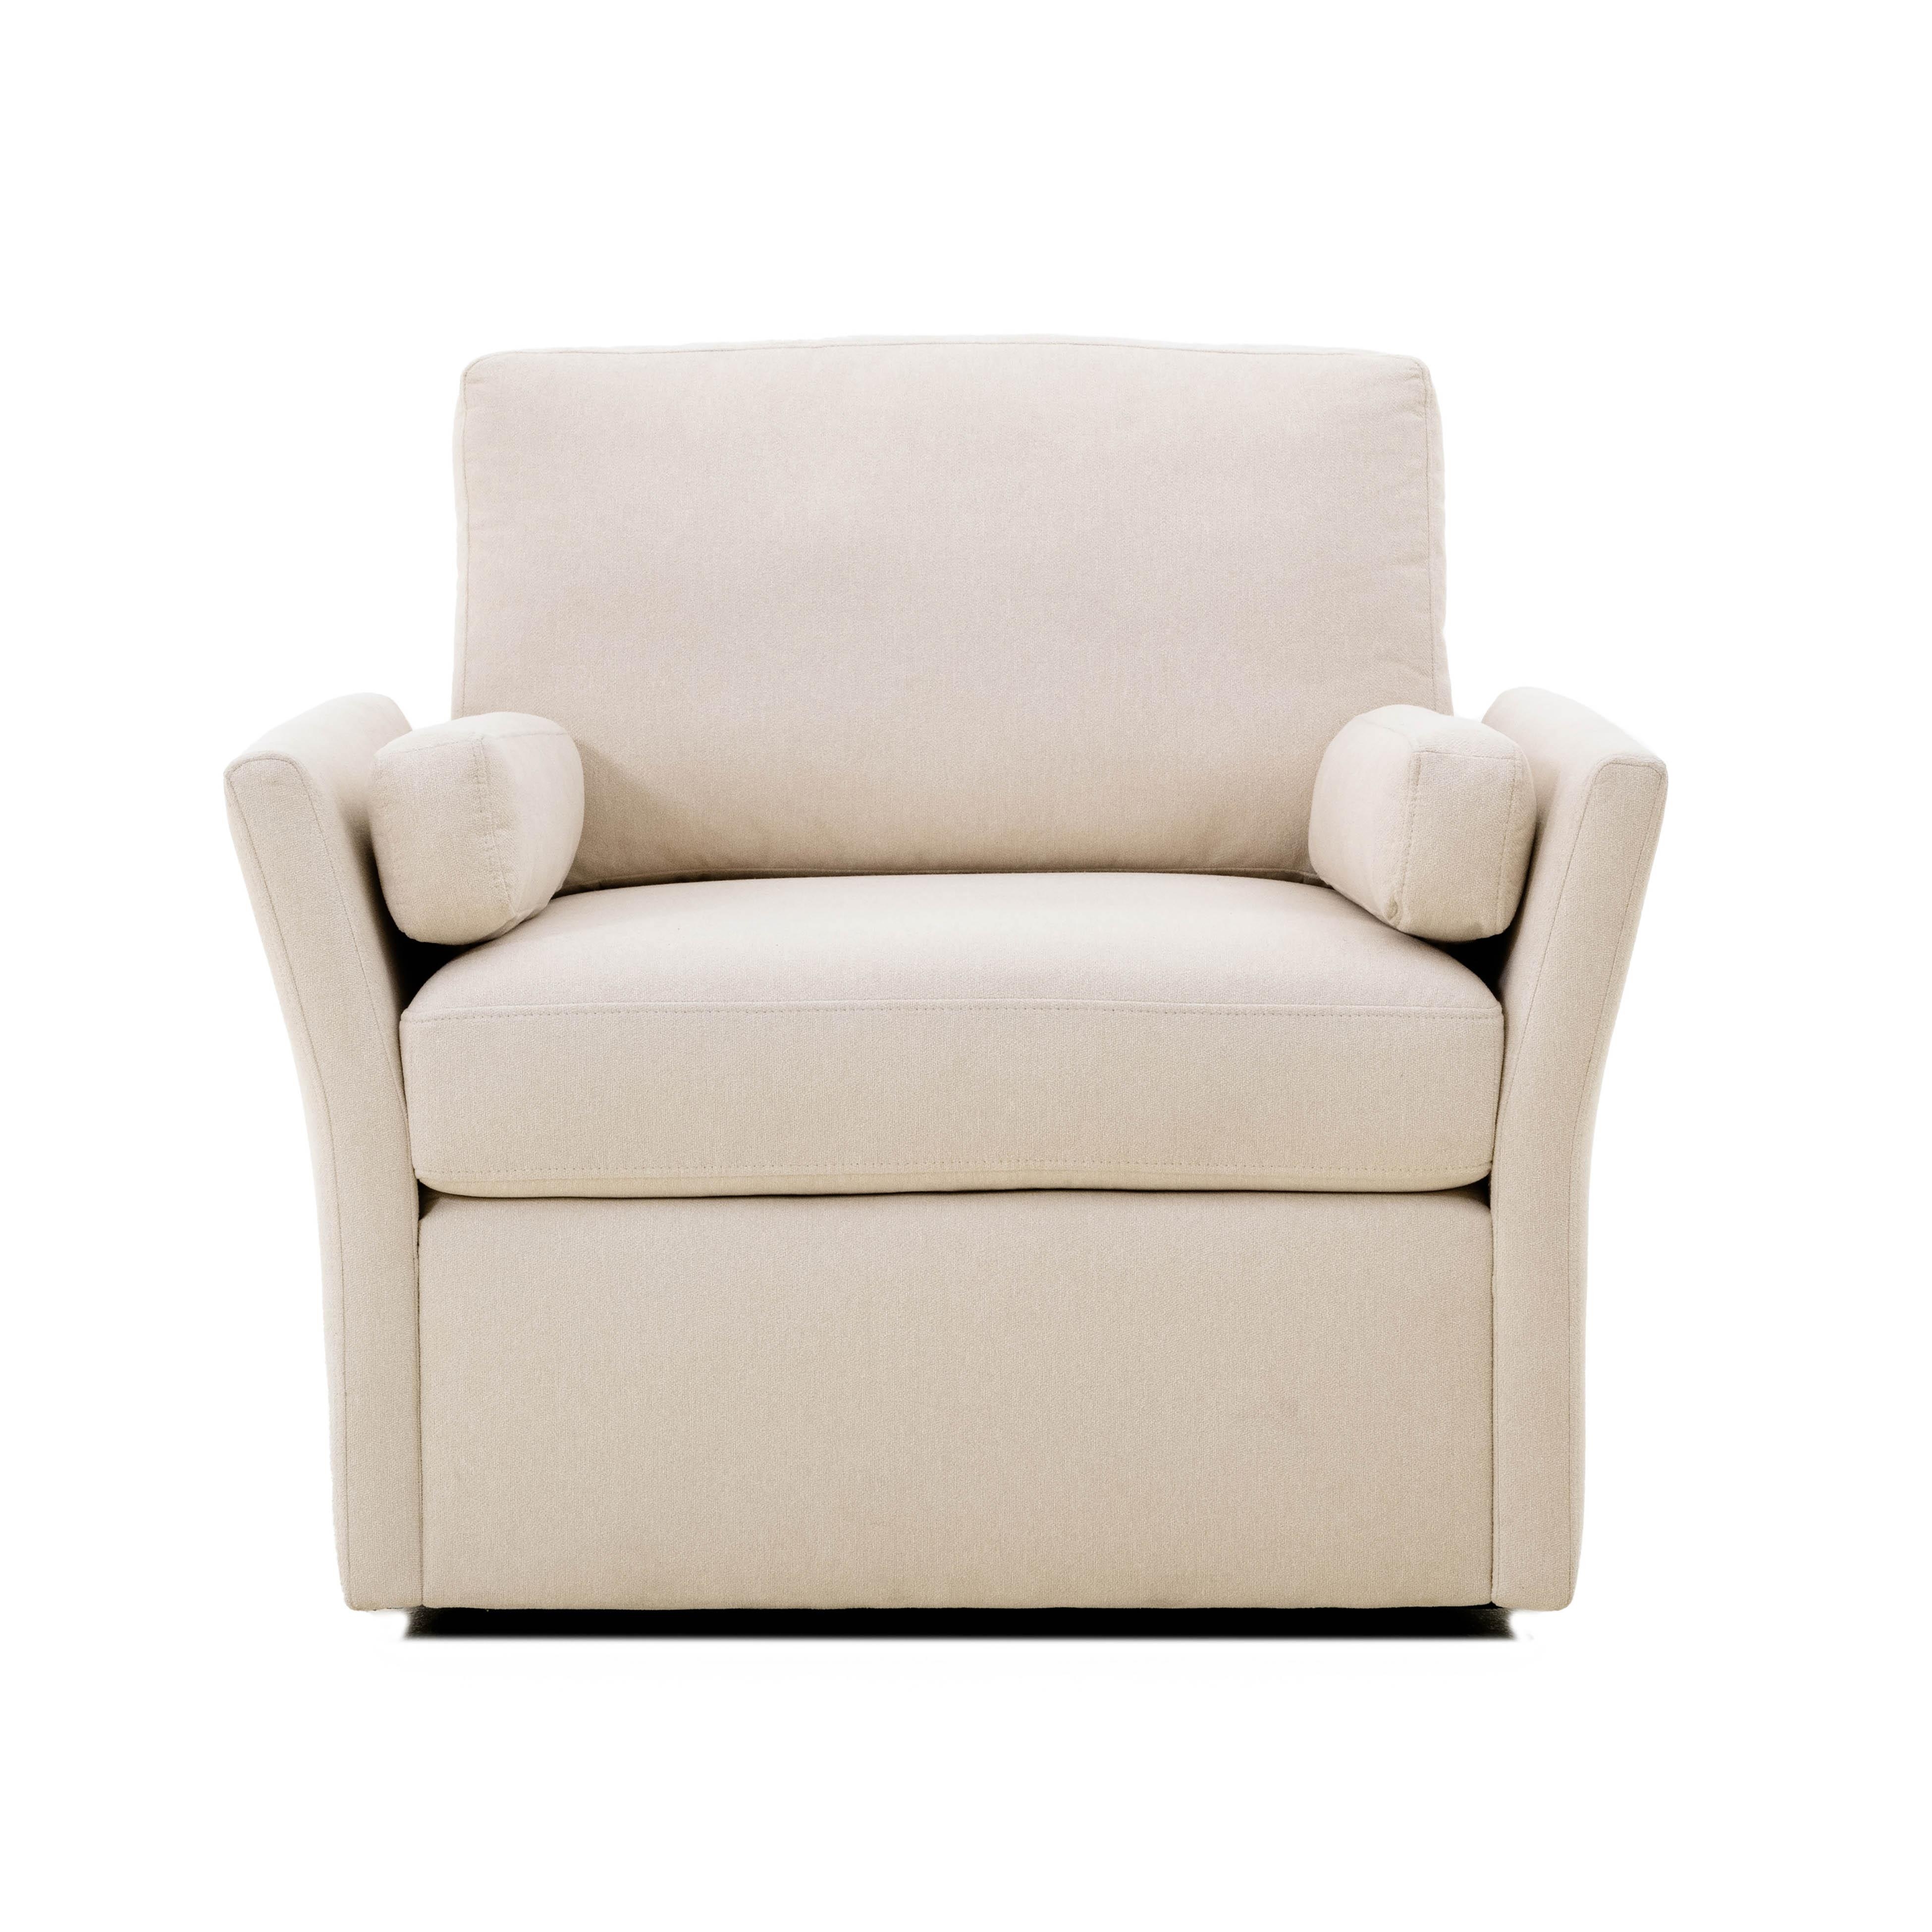 Catarina Cream Swivel Accent Chair - Image 1